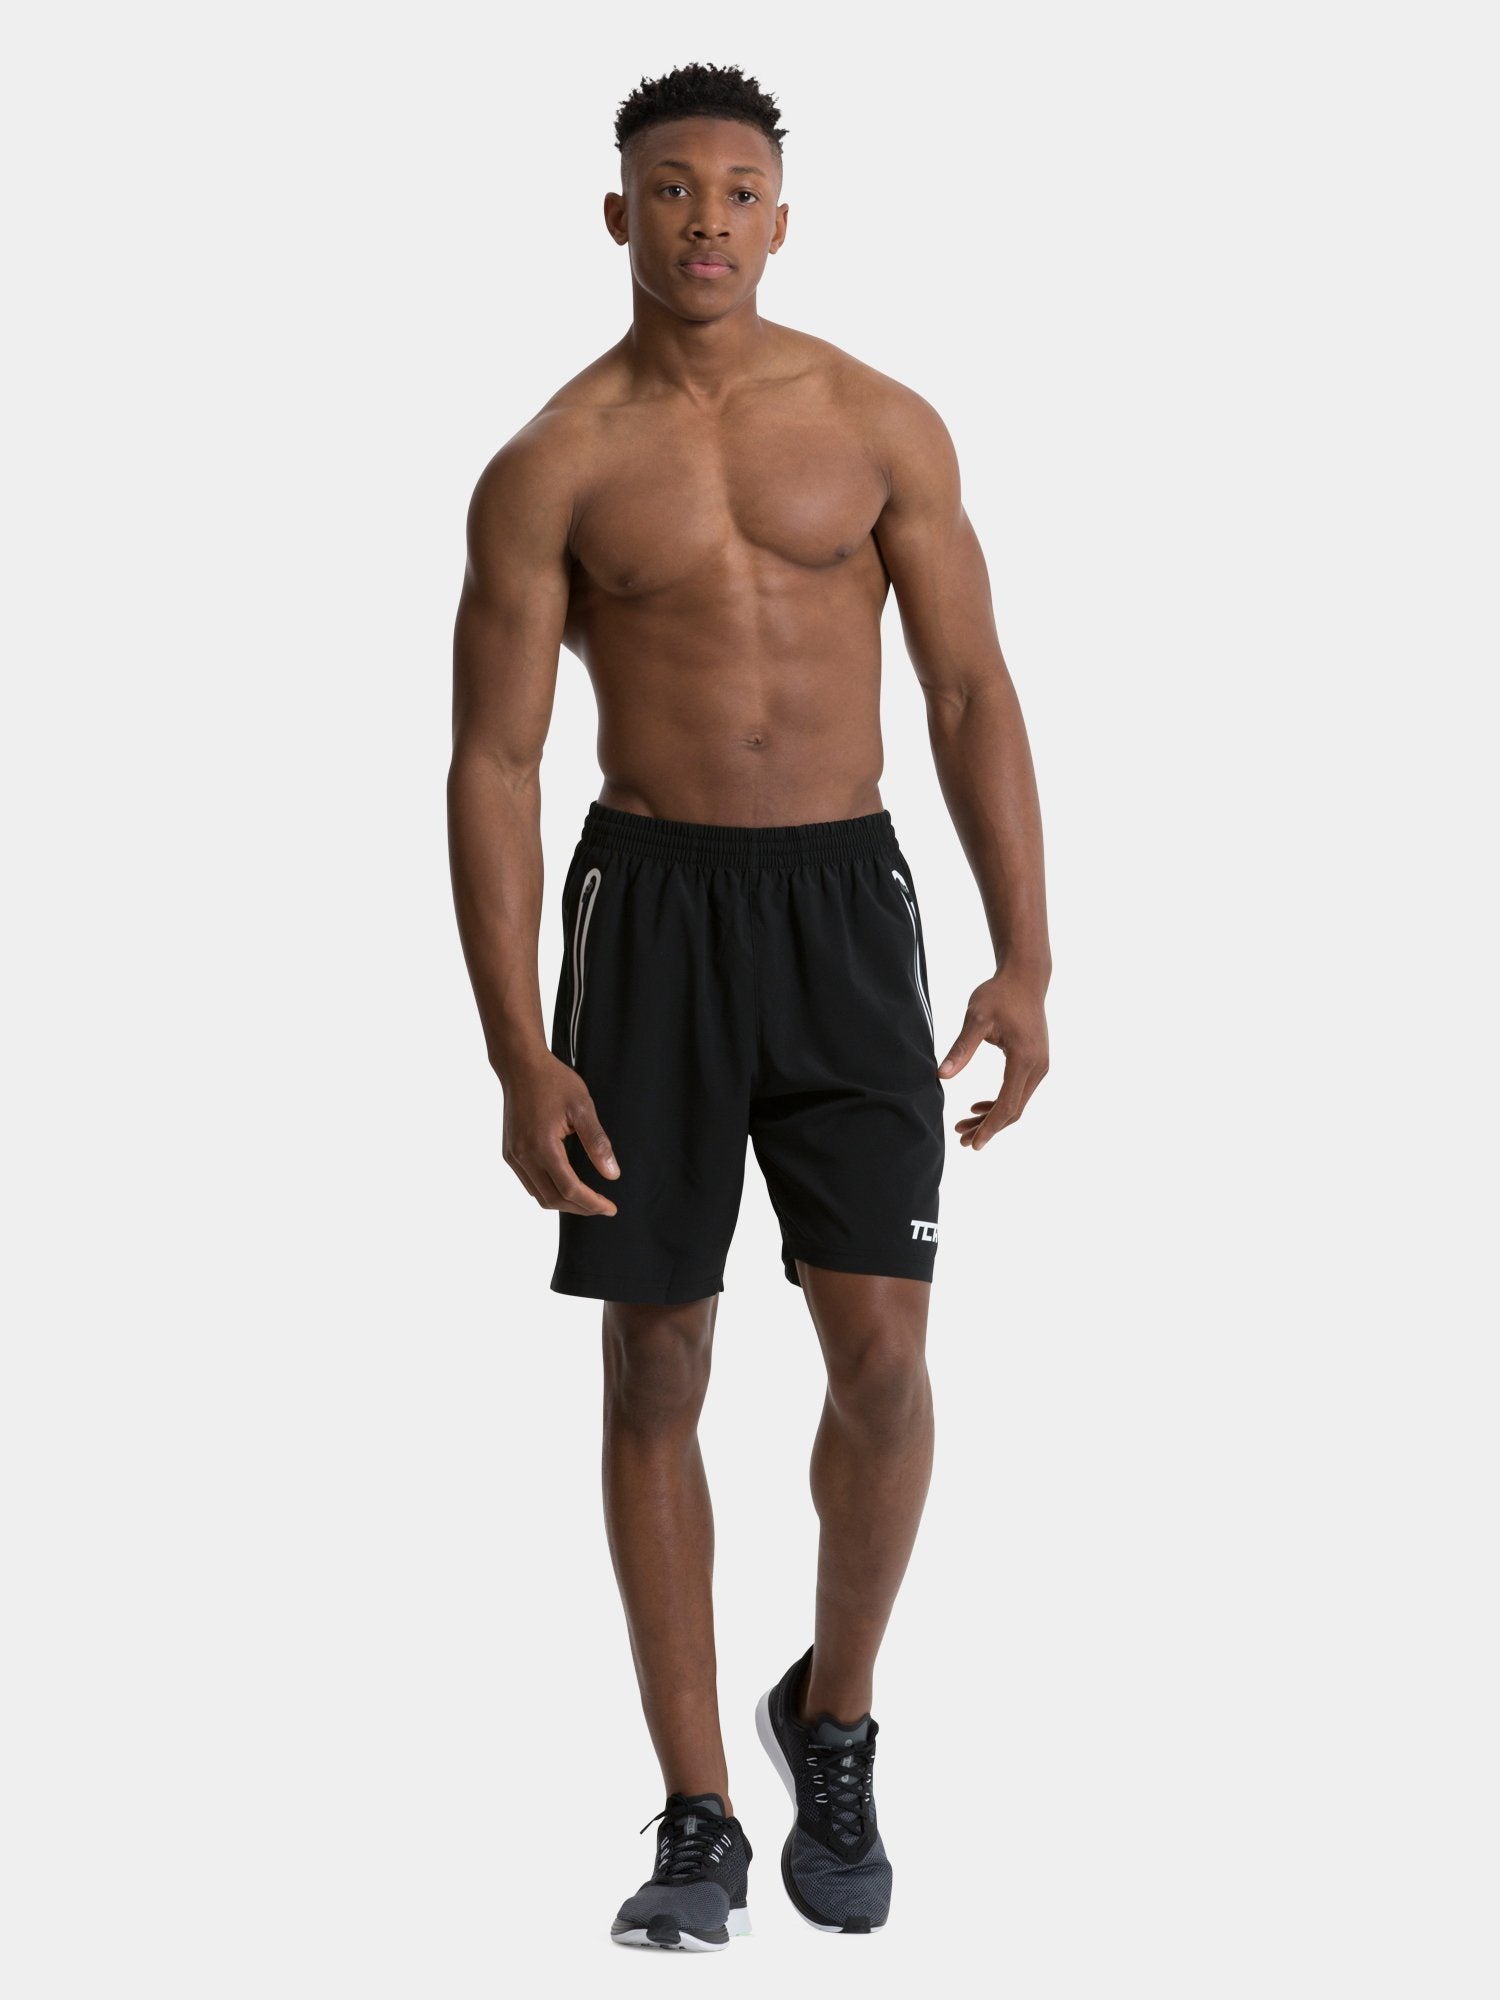 Mens Gym Shorts & Compression Shorts – Elite